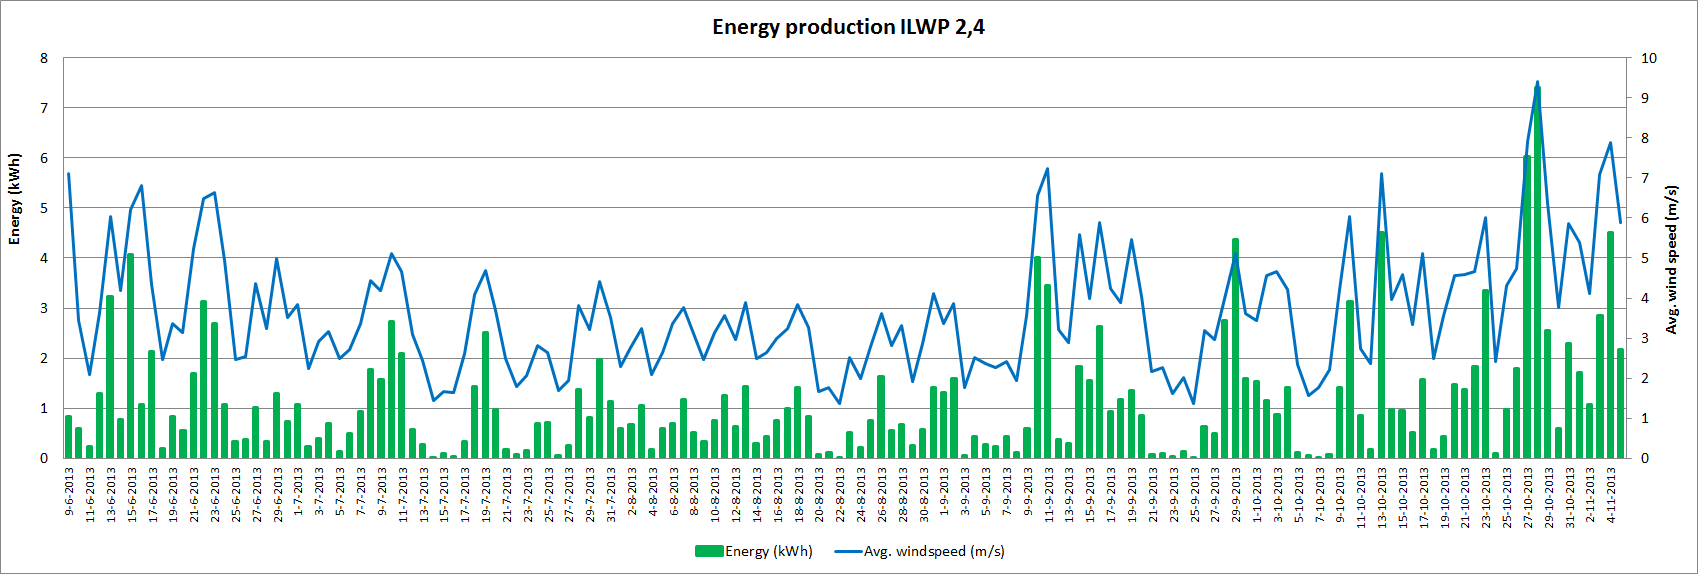 ILWP 2,4 energy total